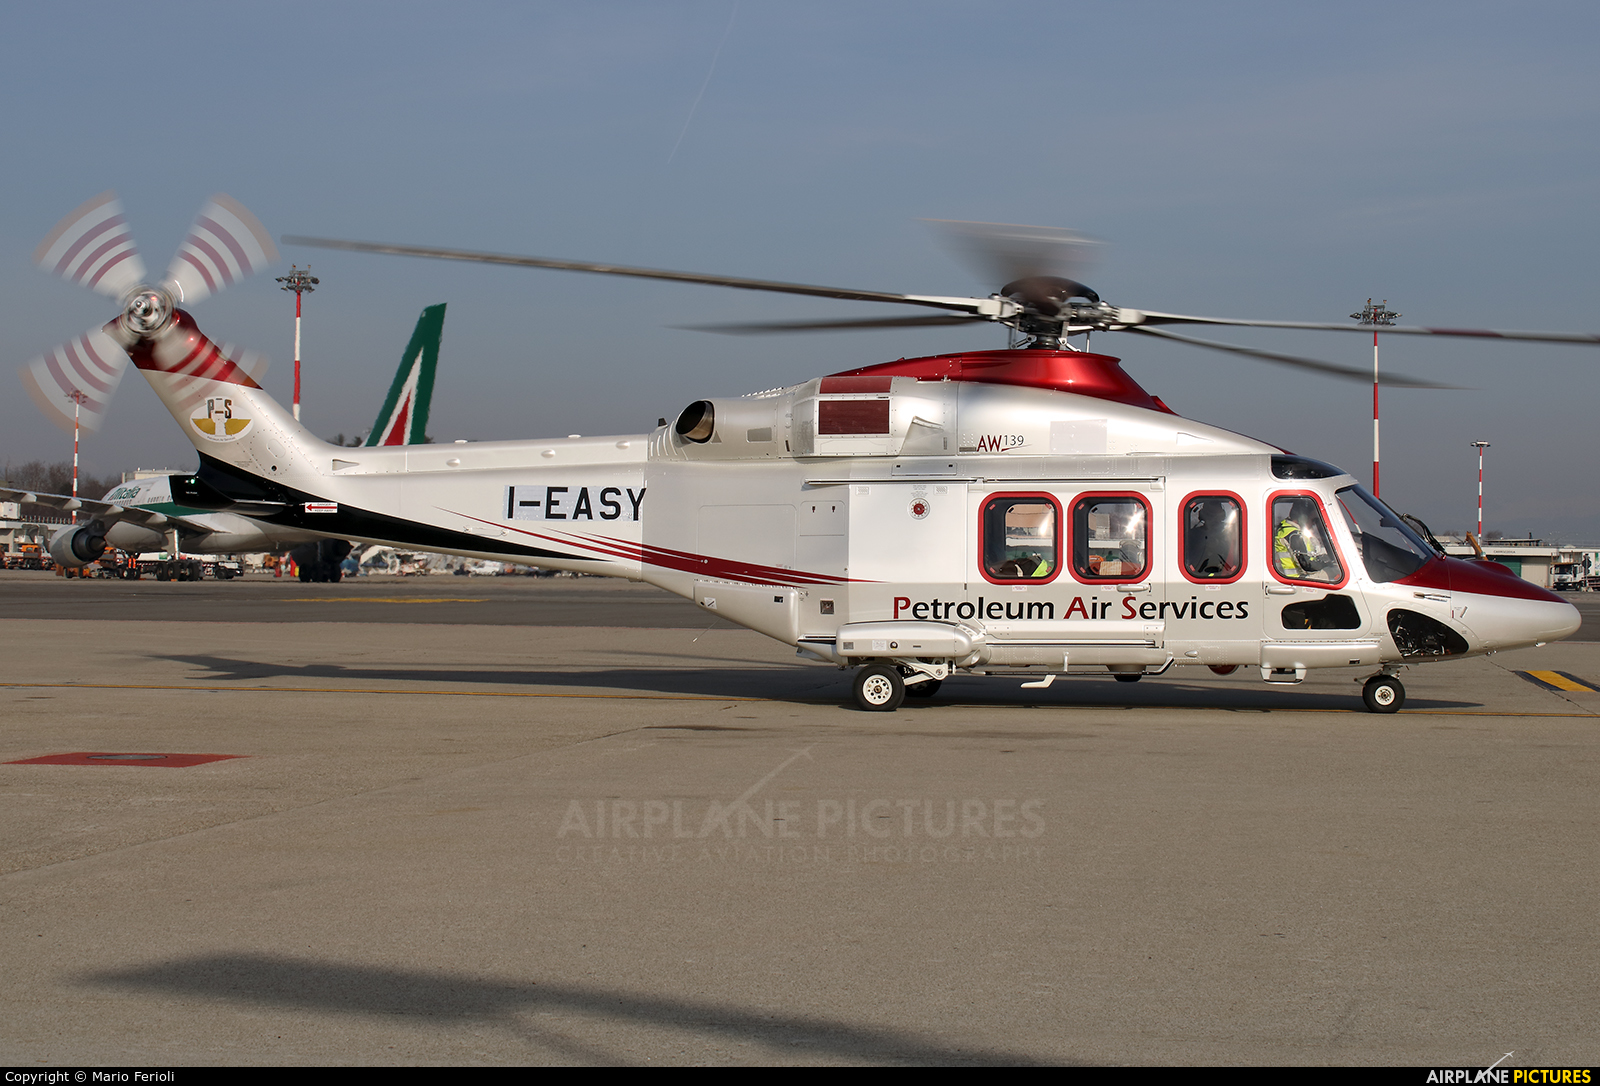 Petroleum Air Service I-EASY aircraft at Milan - Malpensa